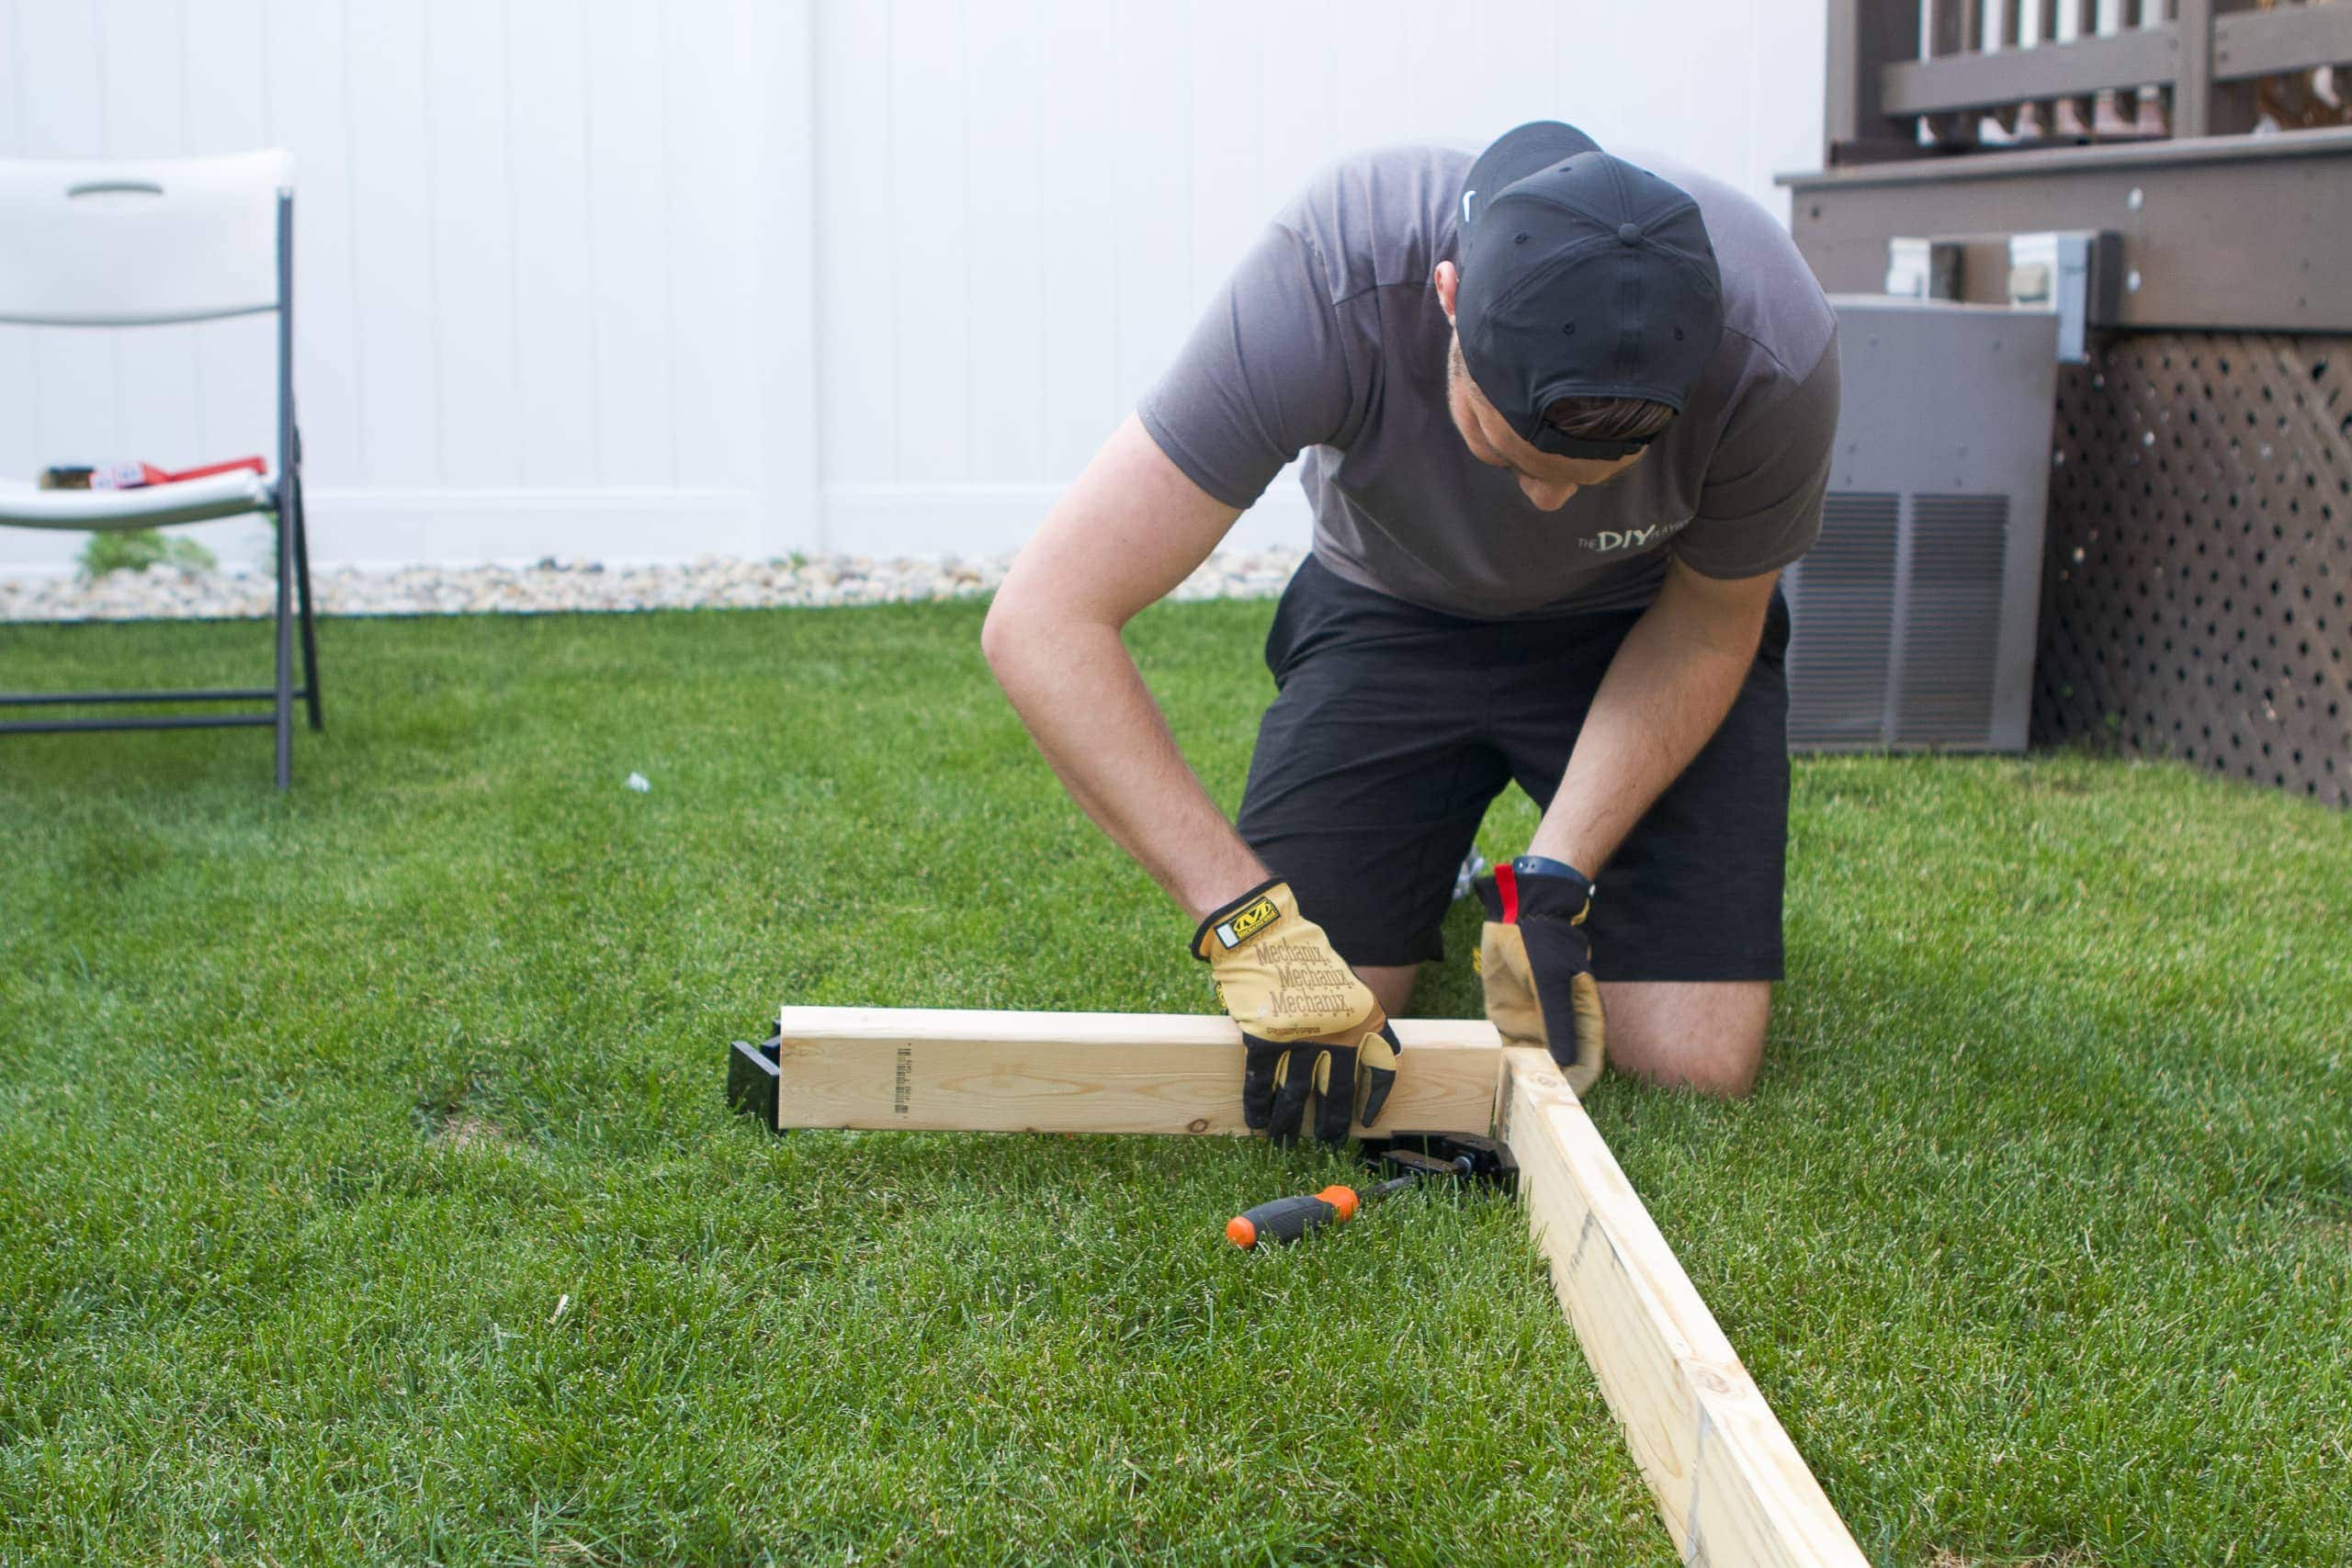 How to assemble a cornhole board